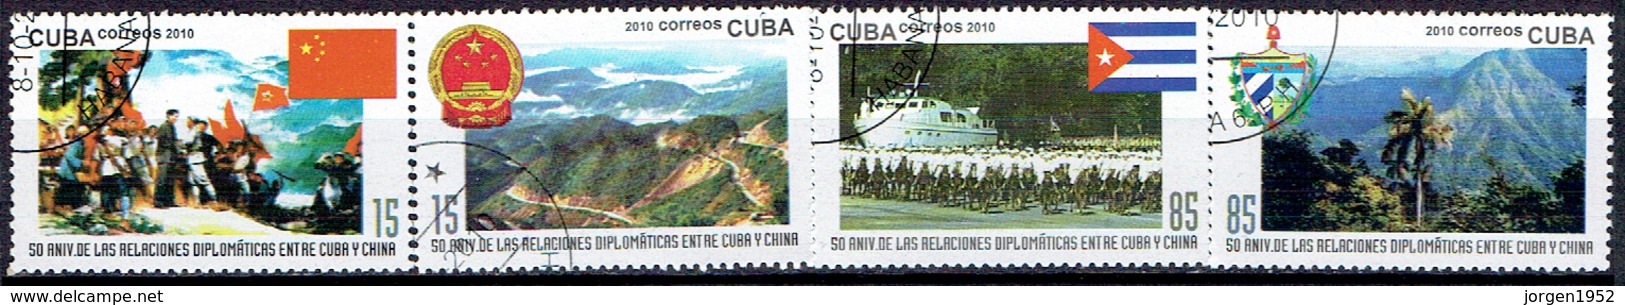 CUBA # FROM 2010 STAMPWORLD 5471-75 - Gebruikt